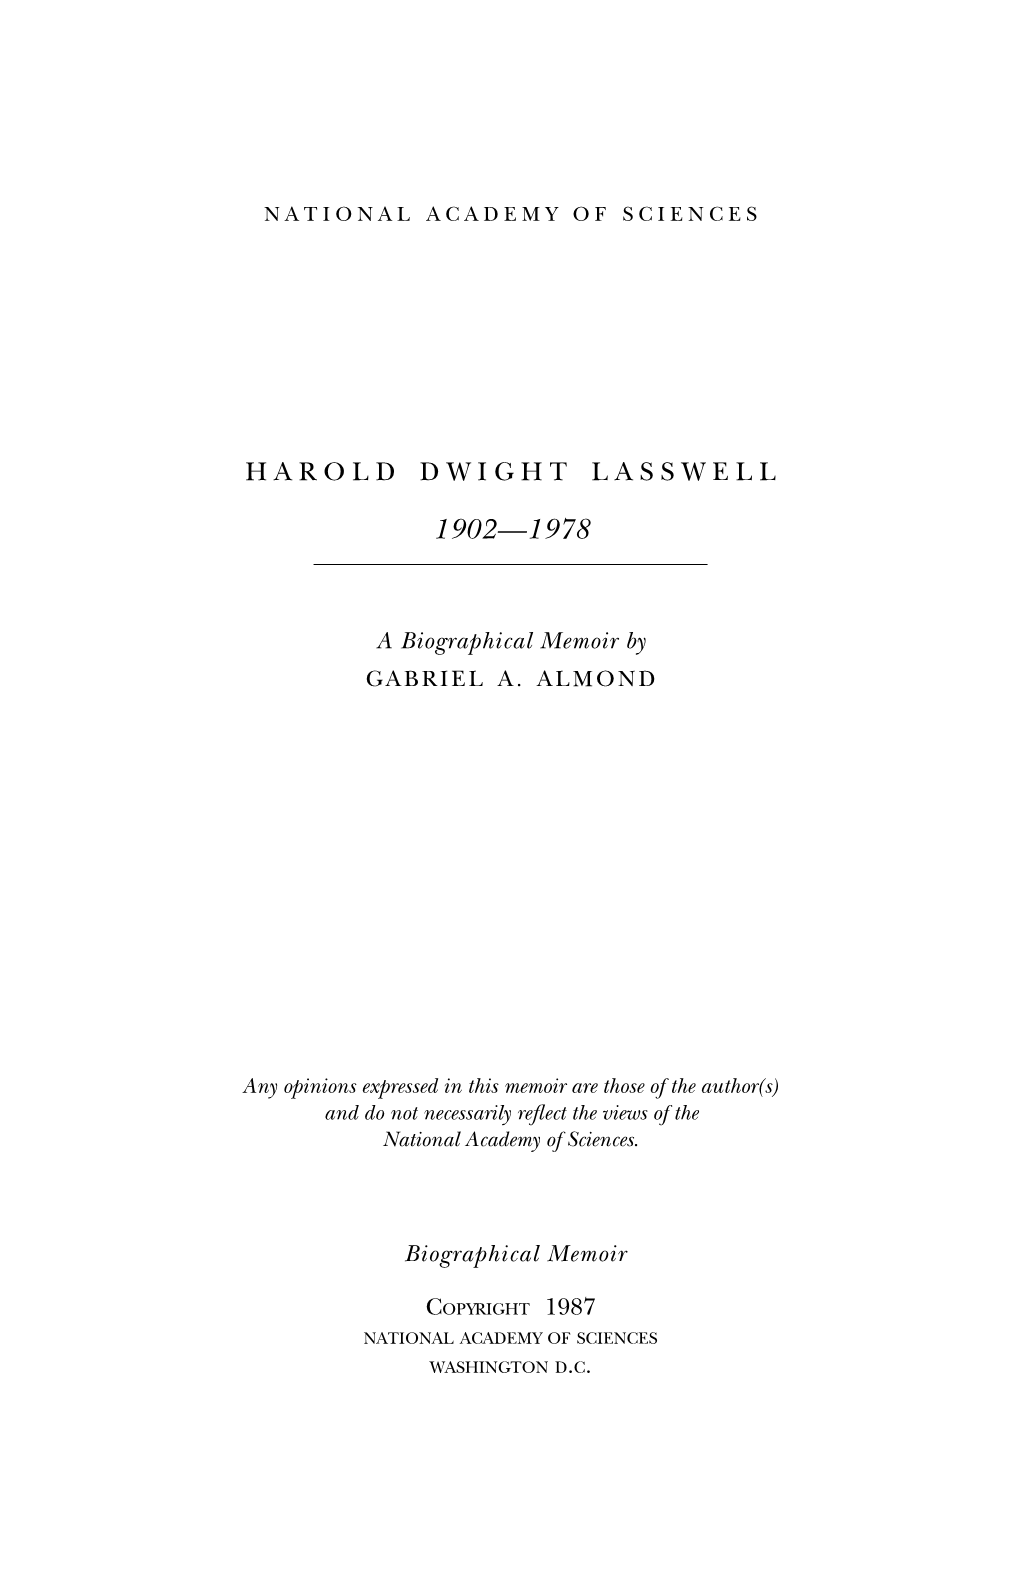 Biography of Harold Dwight Lasswell